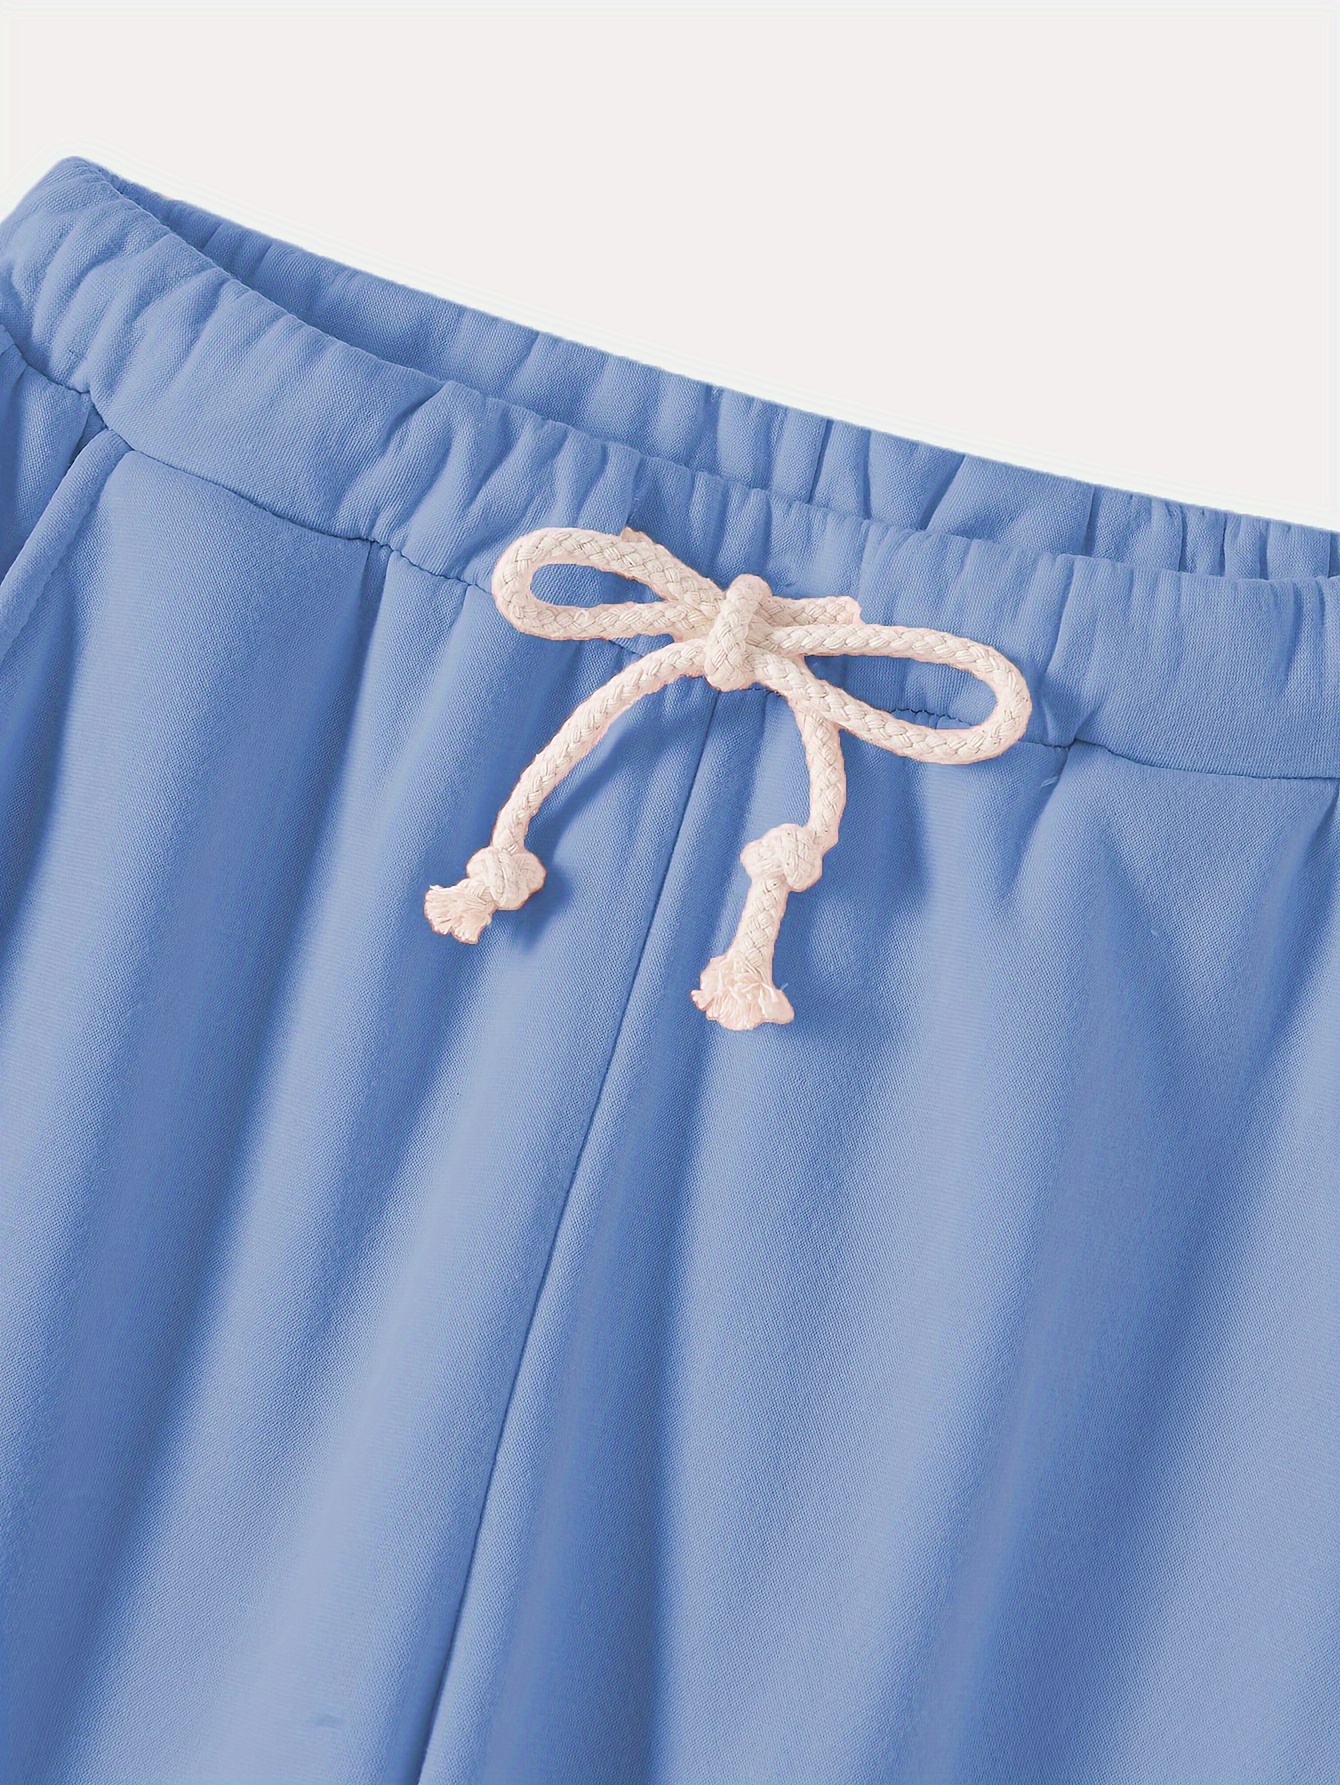 solid drawstring thermal sweatpants versatile loose comfy jogger pants womens clothing details 36